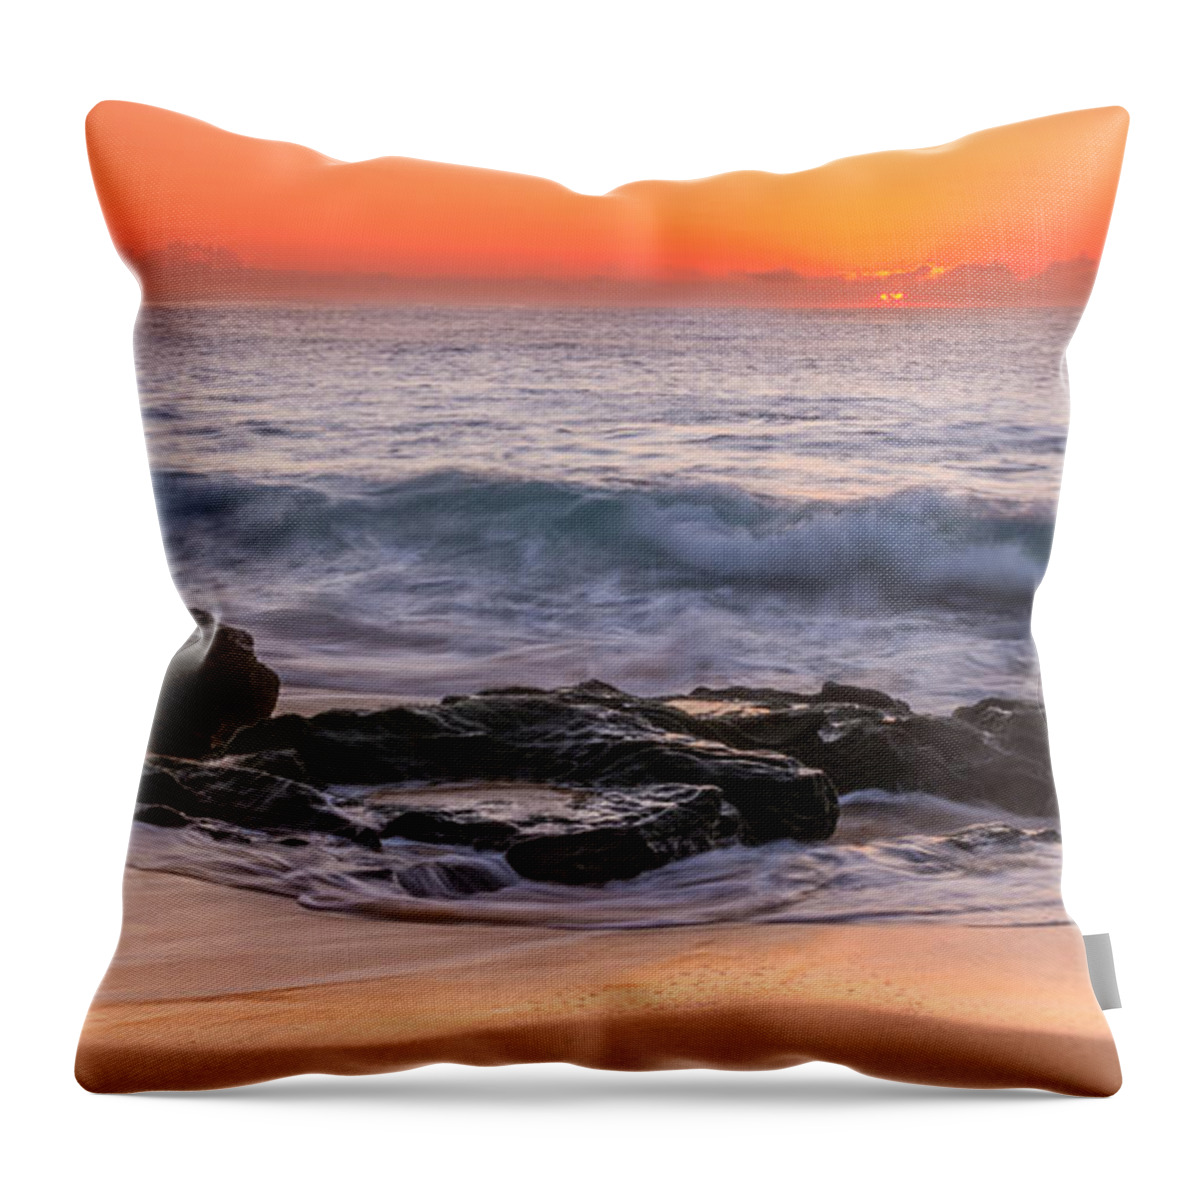 Middle Beach Throw Pillow featuring the photograph Middle Beach Sunrise by Racheal Christian